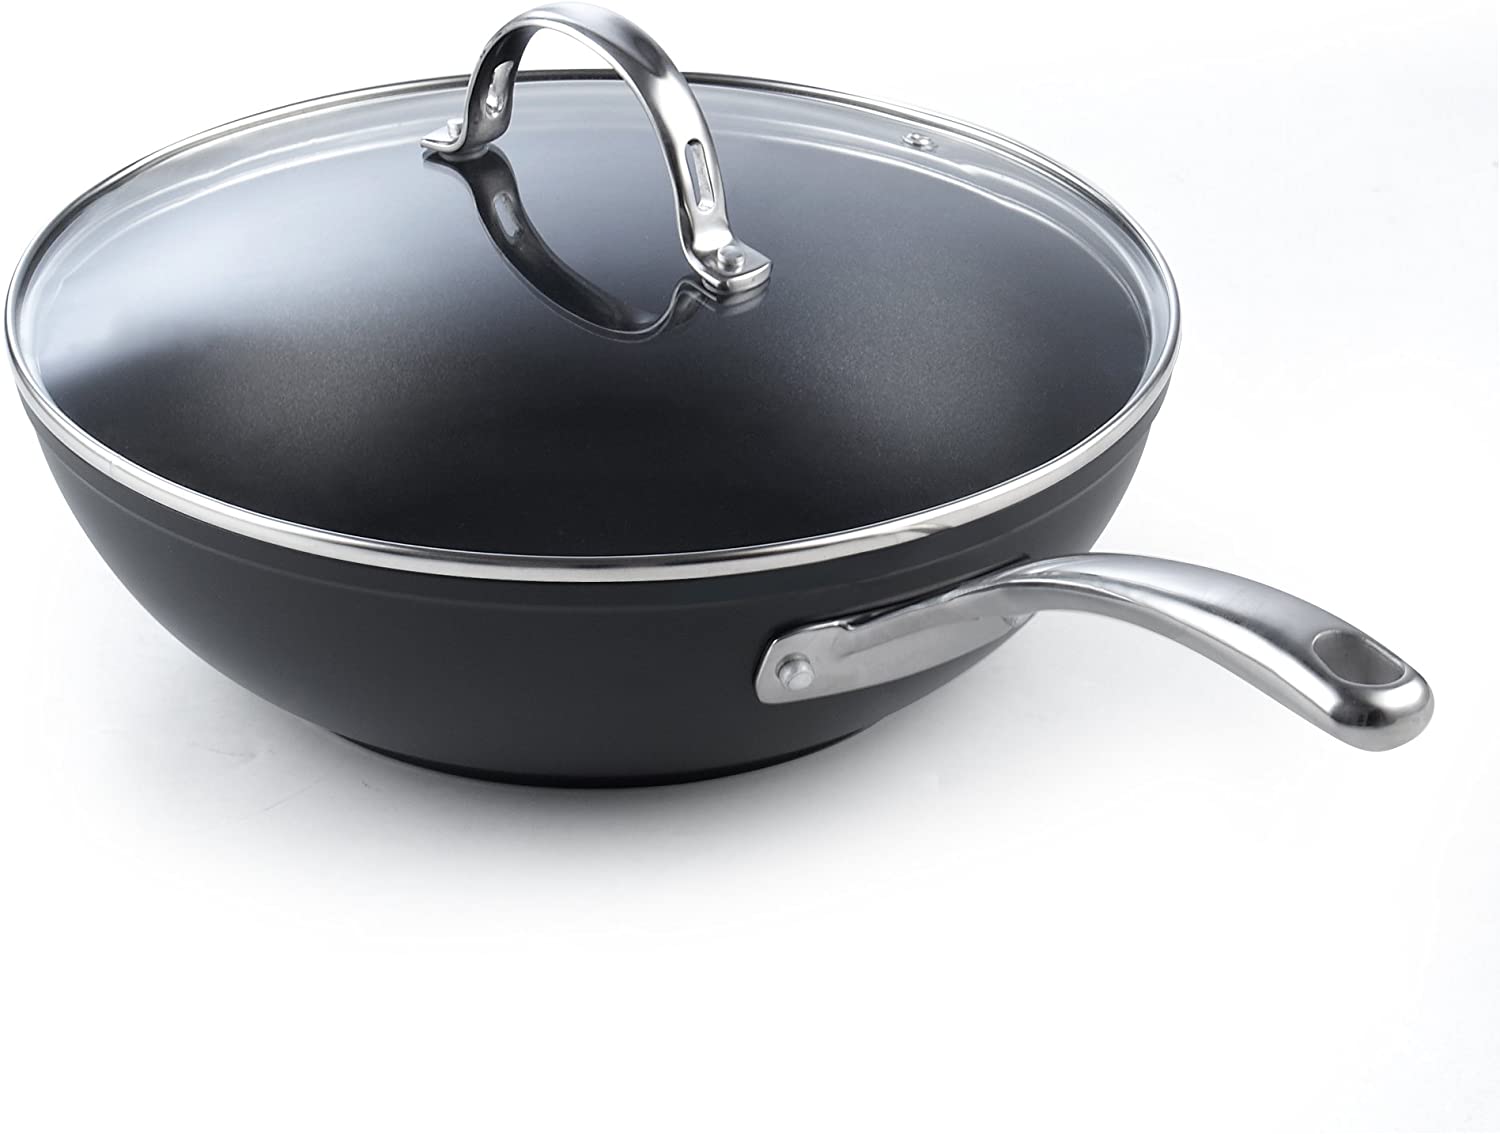 Stainless Steel Wok, Nonstick Deep Frying Pan For Stir- Fry